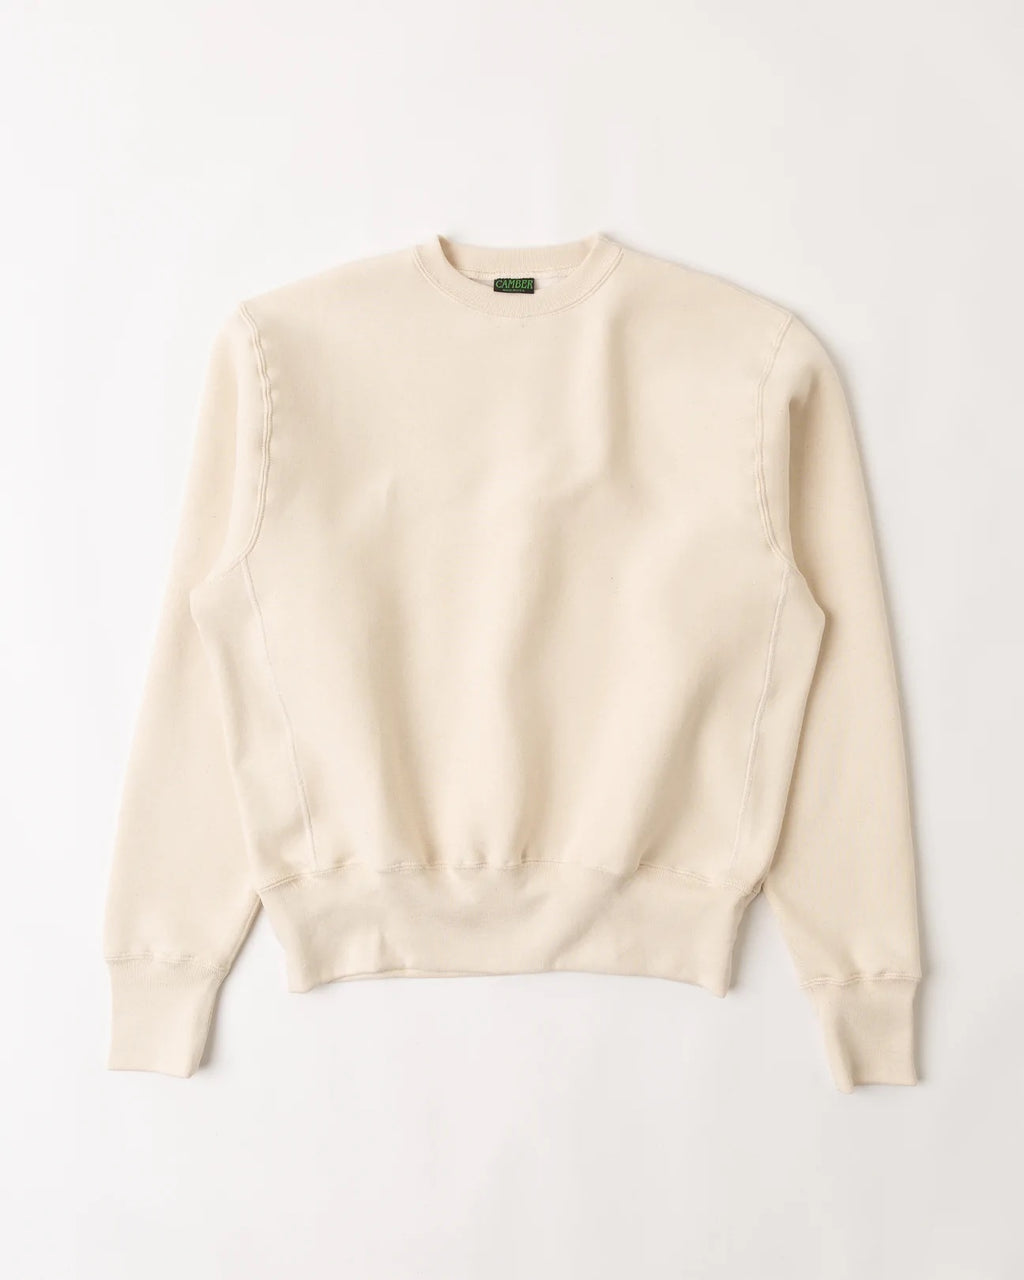 Camber 12 oz. Cross Knit Crewneck Sweatshirt  - Natural